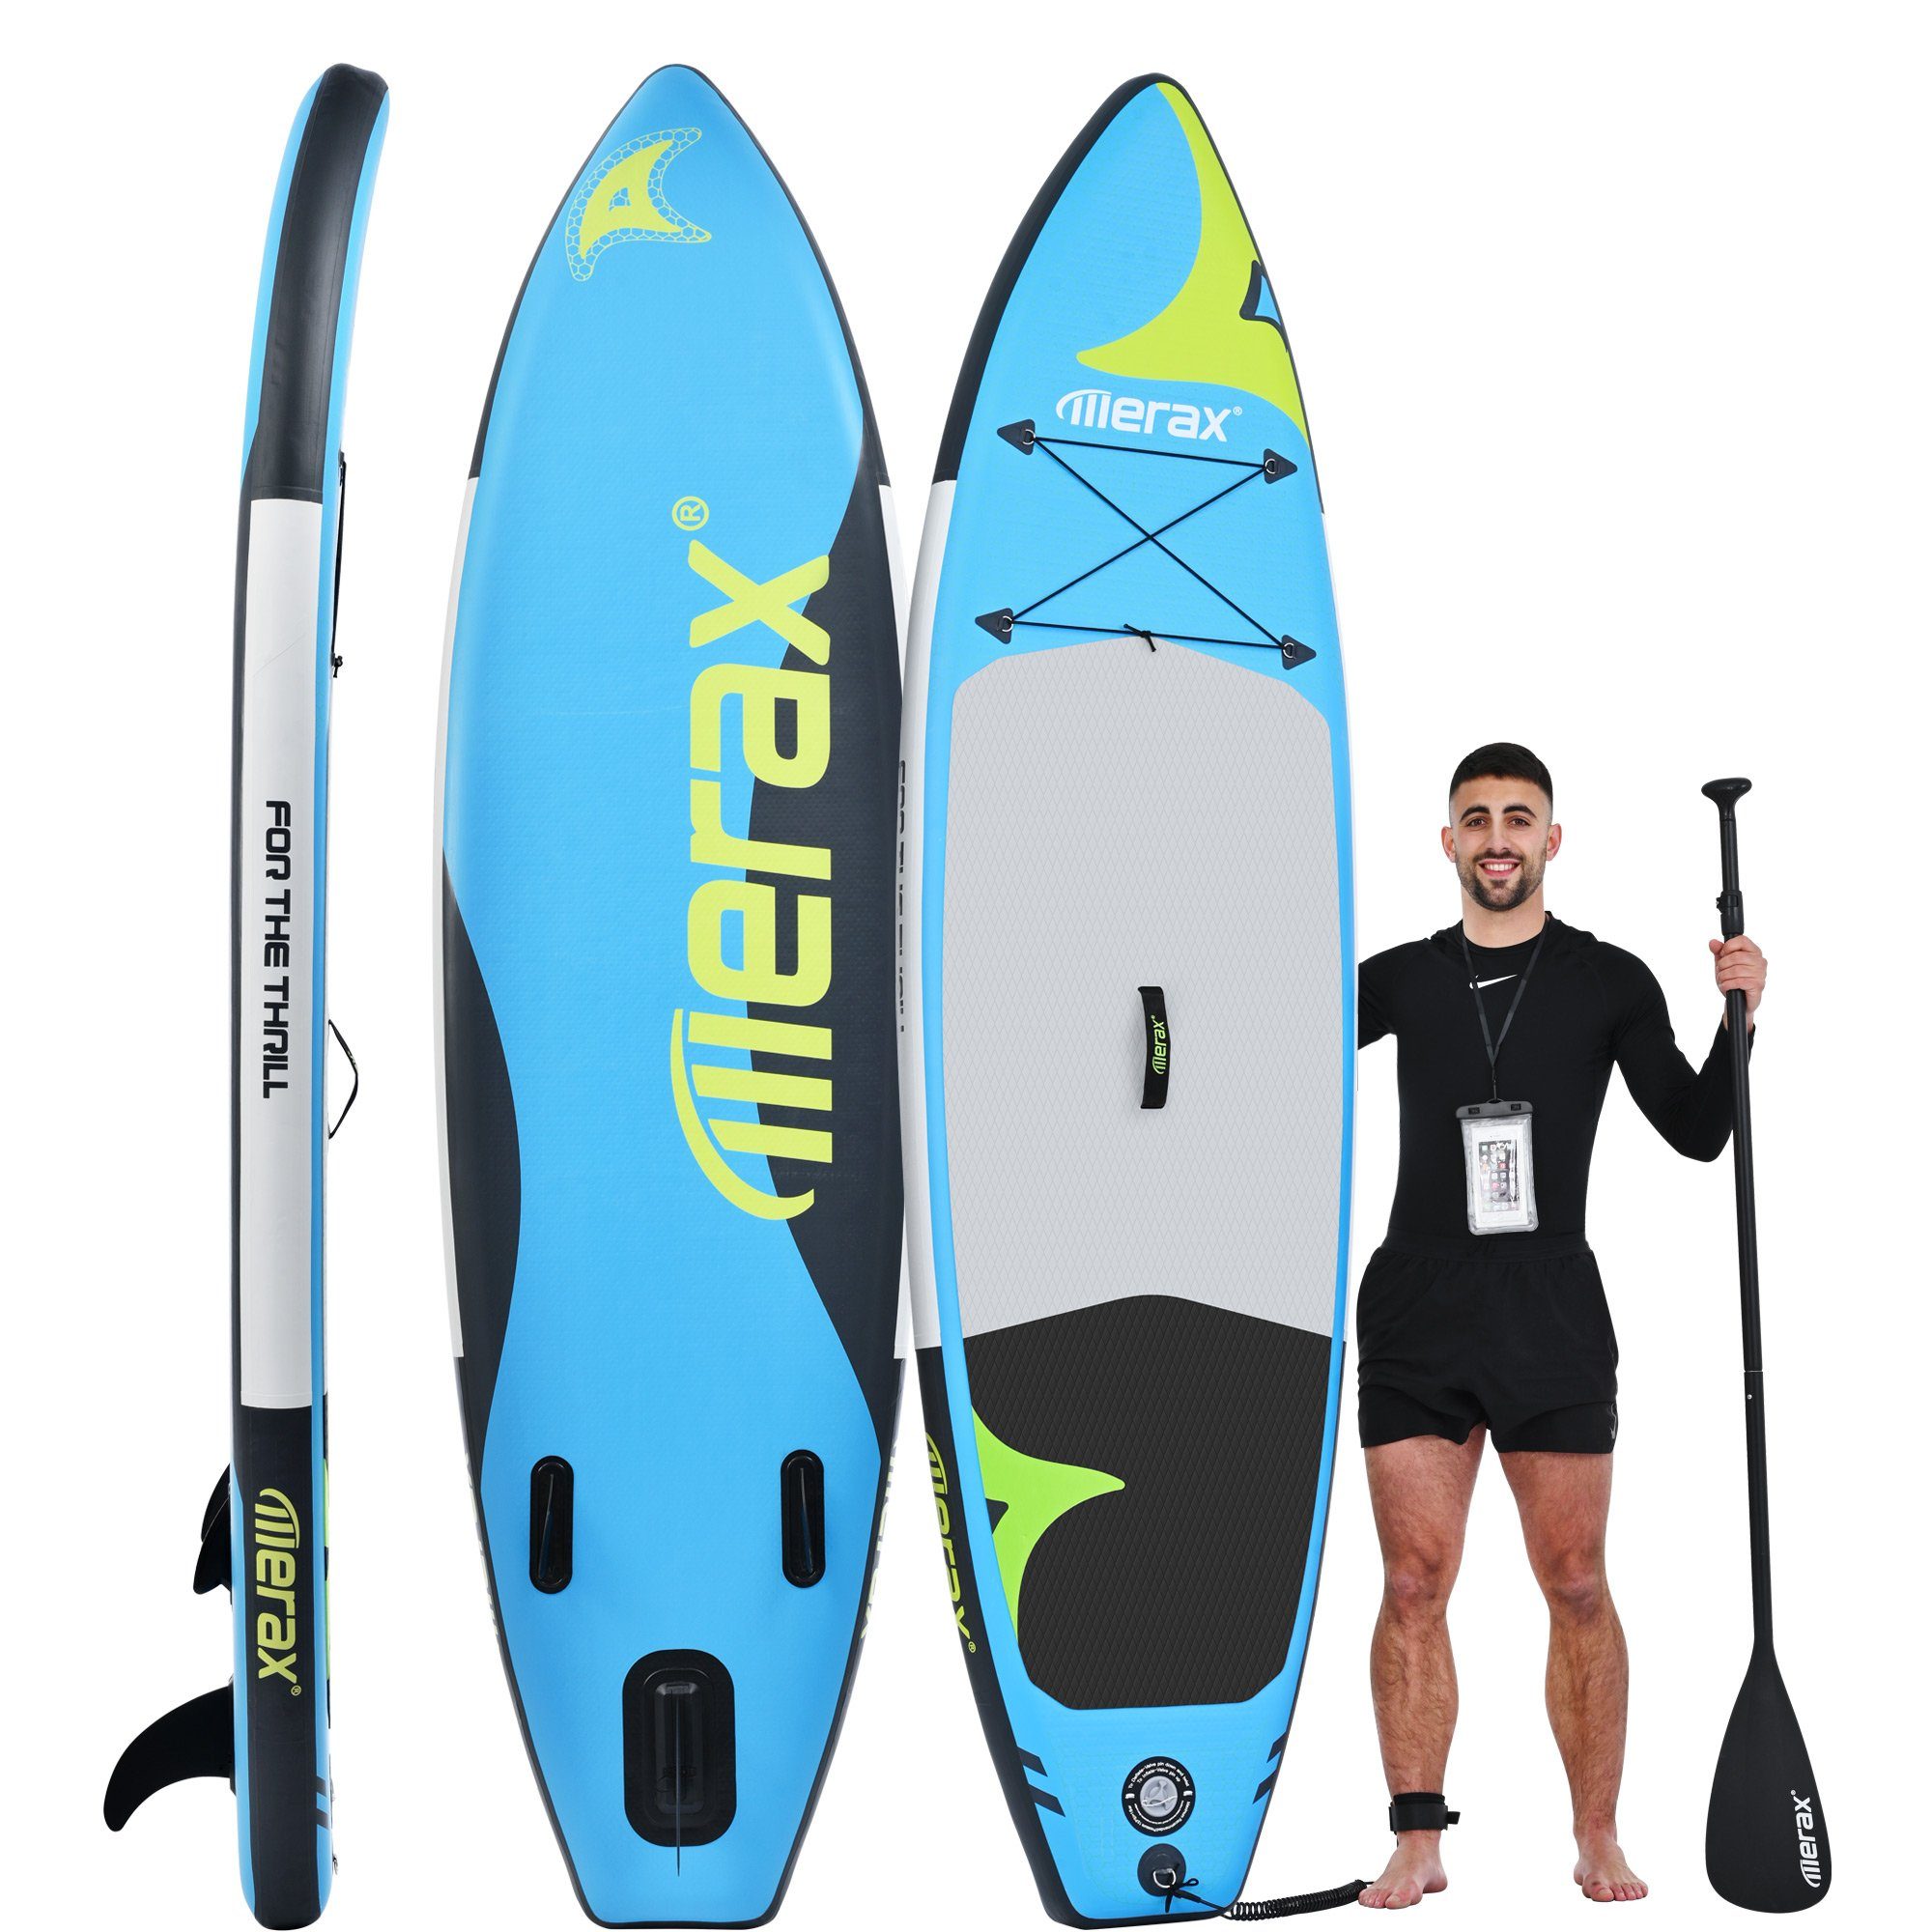 Paddle Merax aufblasbar Pumpe, SUP-Board Board, ISUP-Reiserucksack, Surfboard inflatable, Surfbrett Up Klomplettset, Schultergurt Stand Set